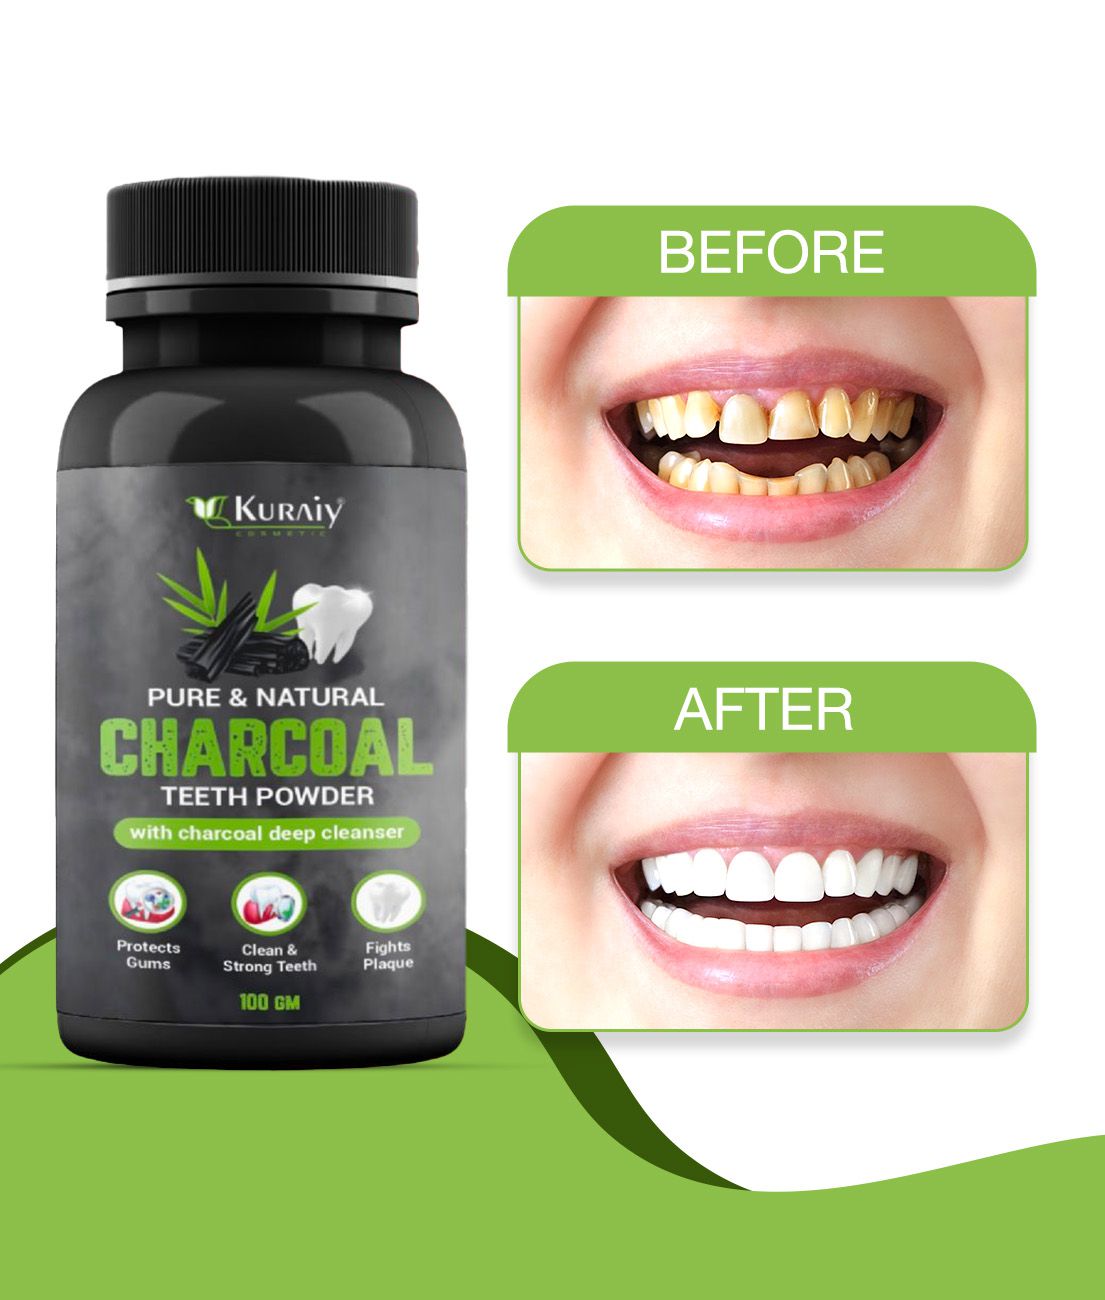     			Kuraiy Real Herbal Pearl Teeth Whitening Powder Stains Teeth Cleaning Care Products 100G